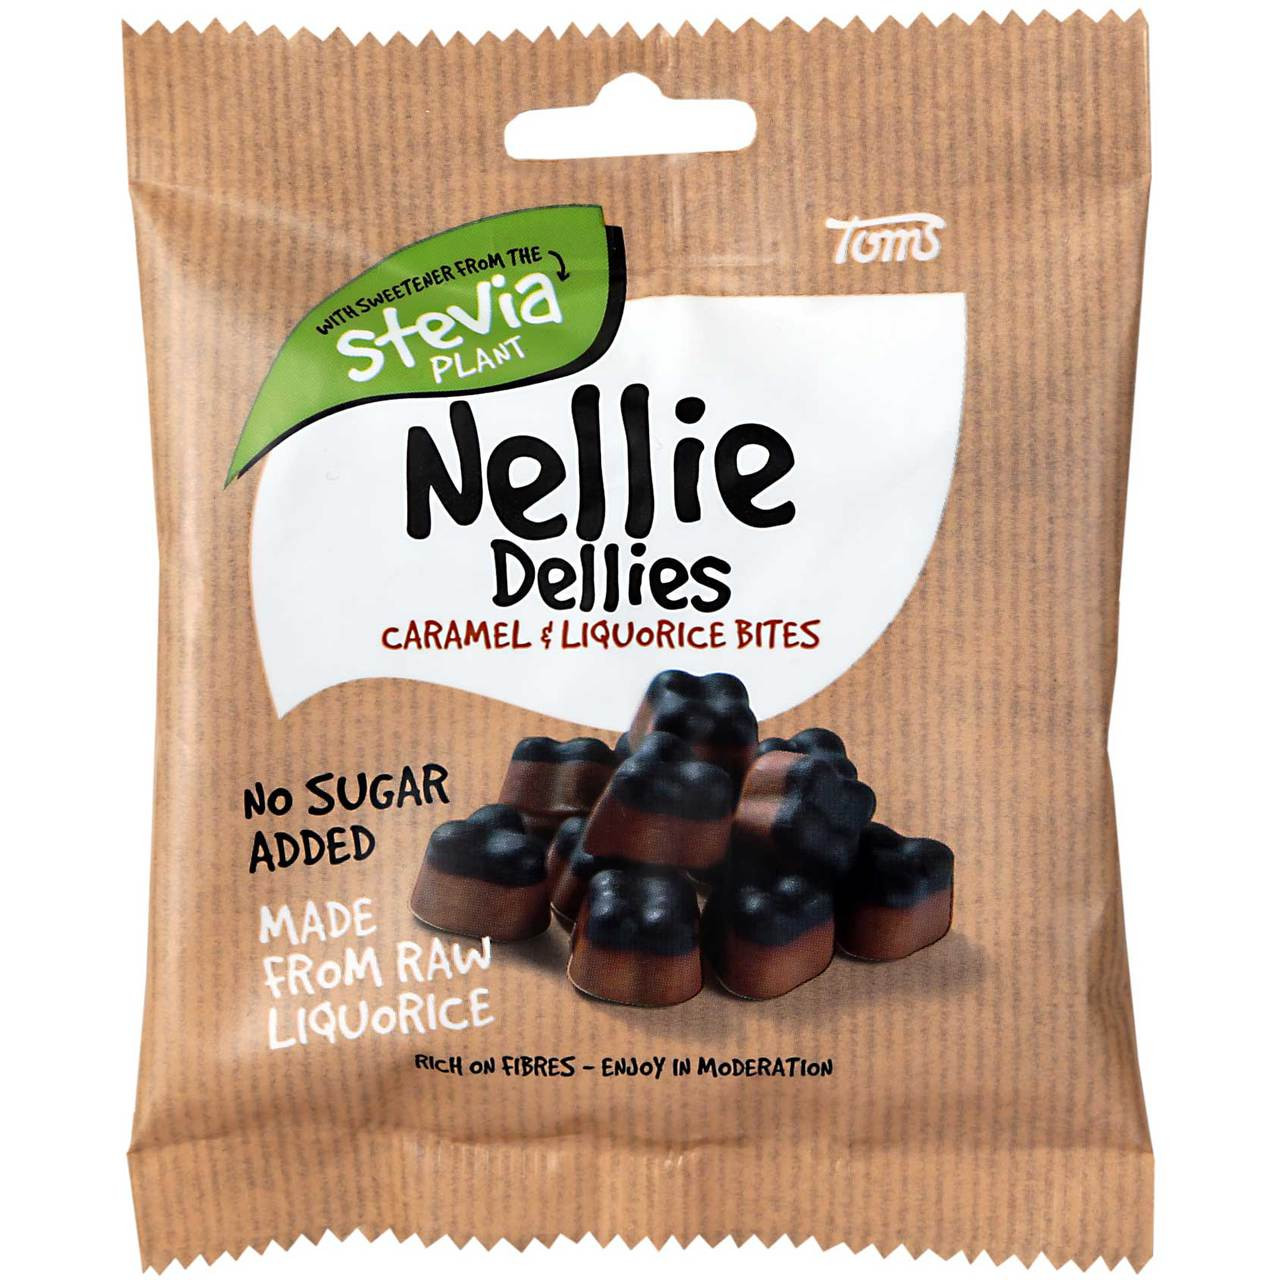 Toms Stevia Nellie Dellies Caramel & Liquorice Bites 90g / 3.1 Oz (soft  marshmallow licorice) - myGermanCandy.Com